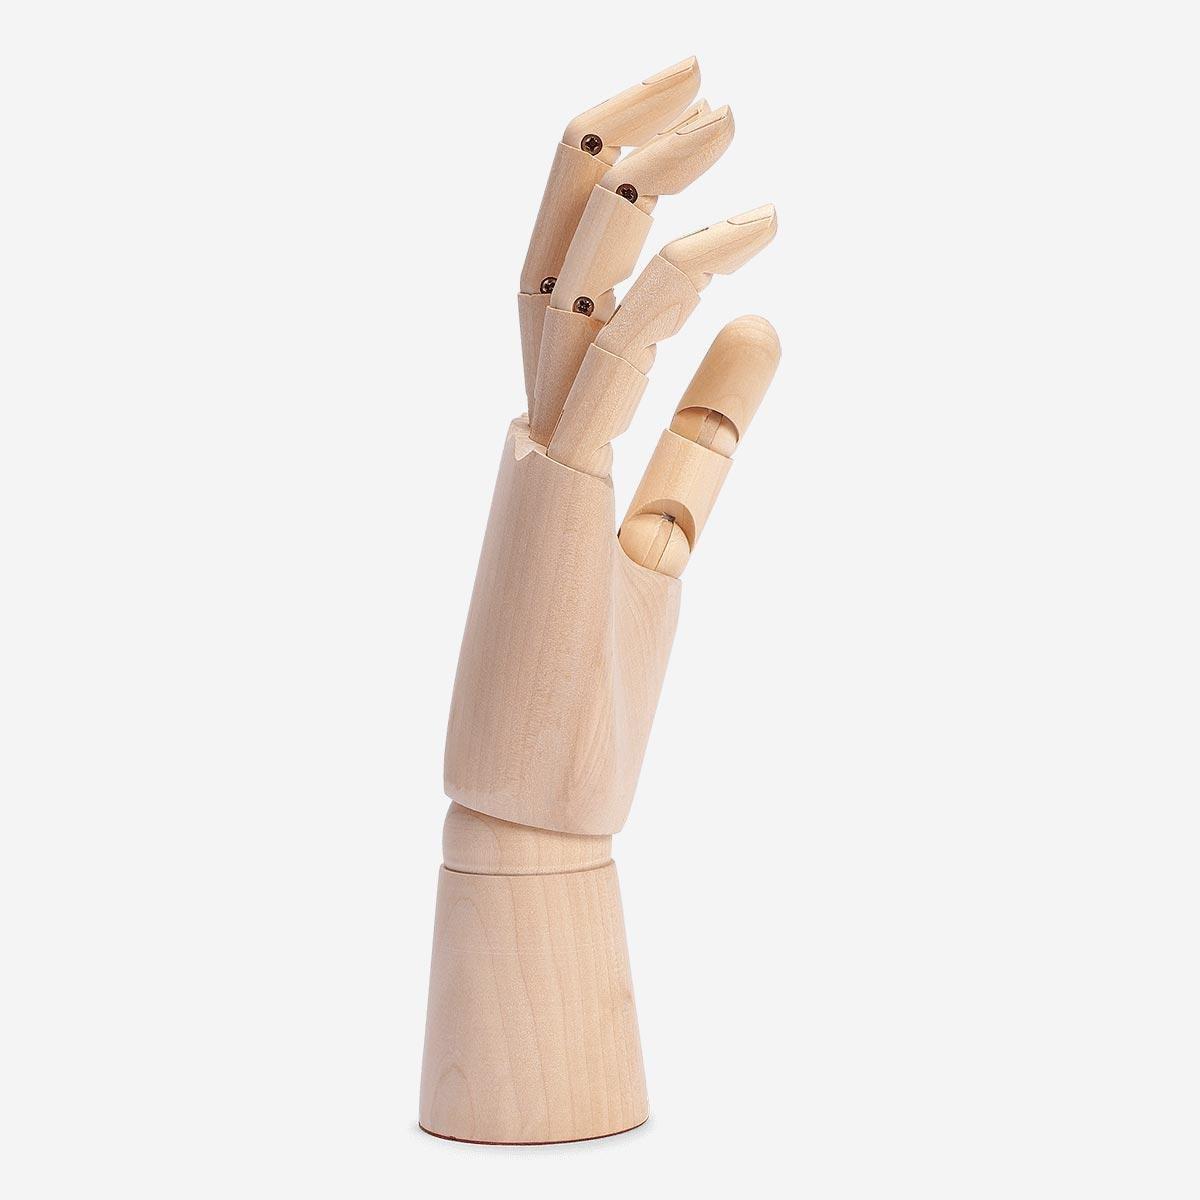 Wooden model croquis hand